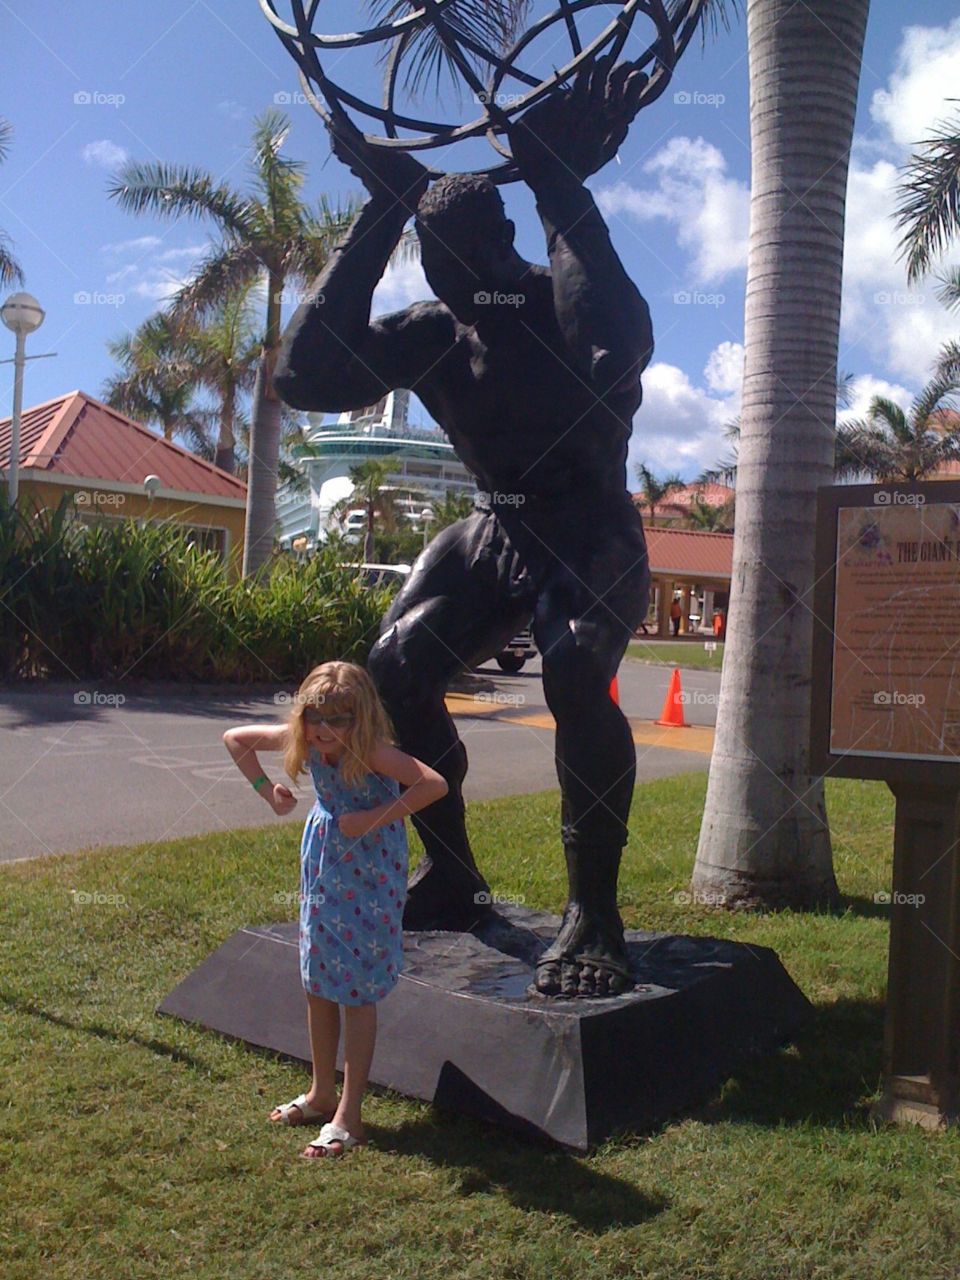 My lil’ poser imitating everything. Strong man statue on St. Maarten, Virgin Islands 🇻🇬 🌴 